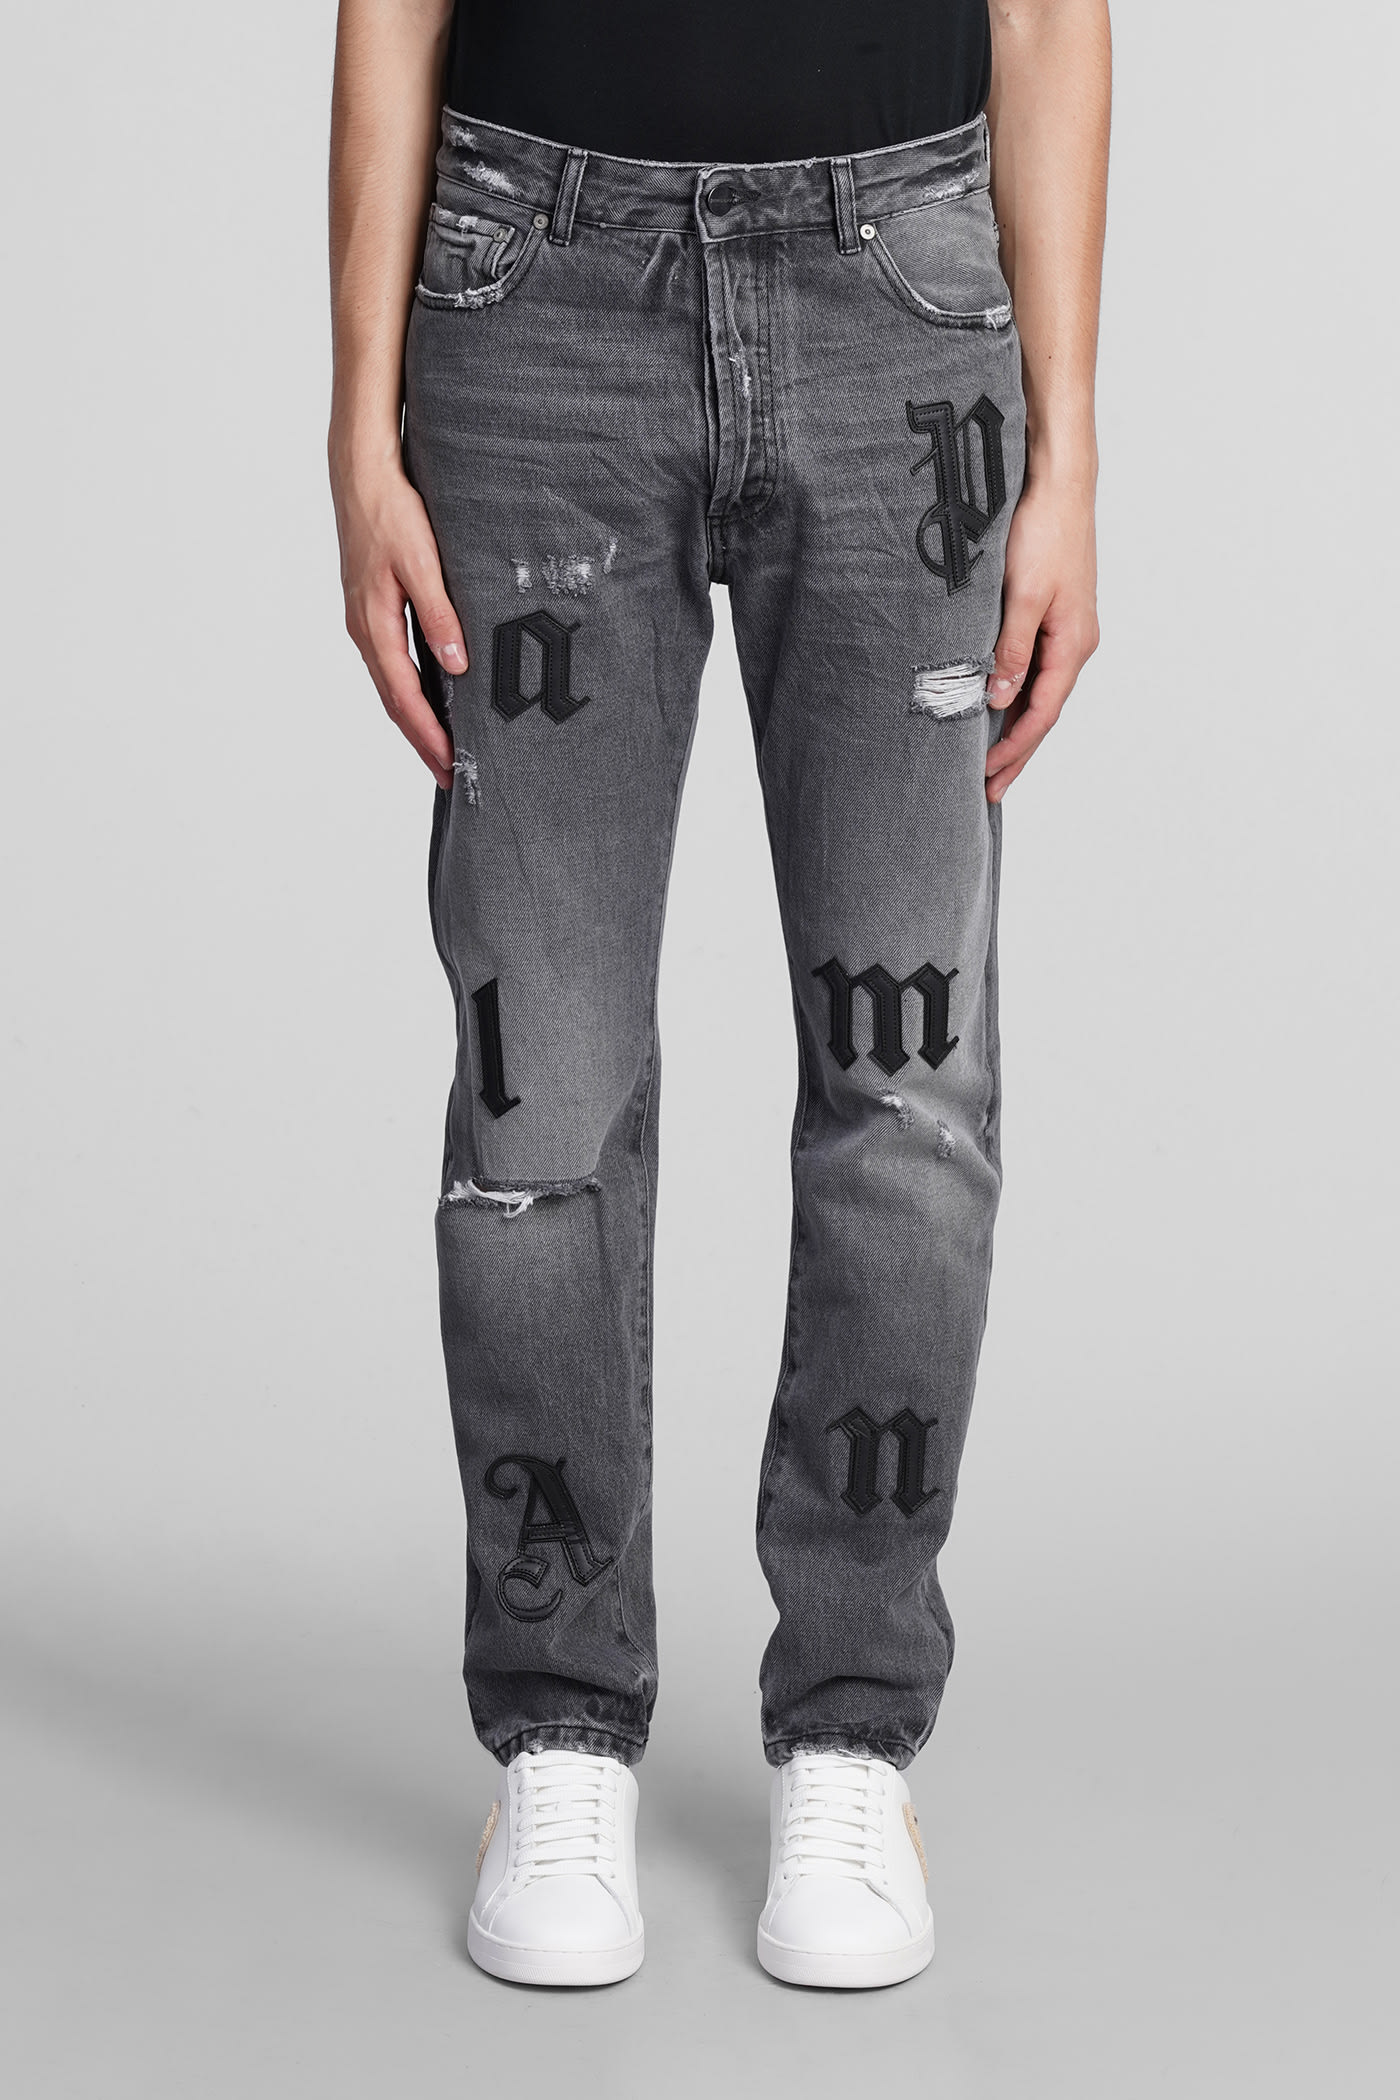 Palm Angels Jeans In Grey Denim